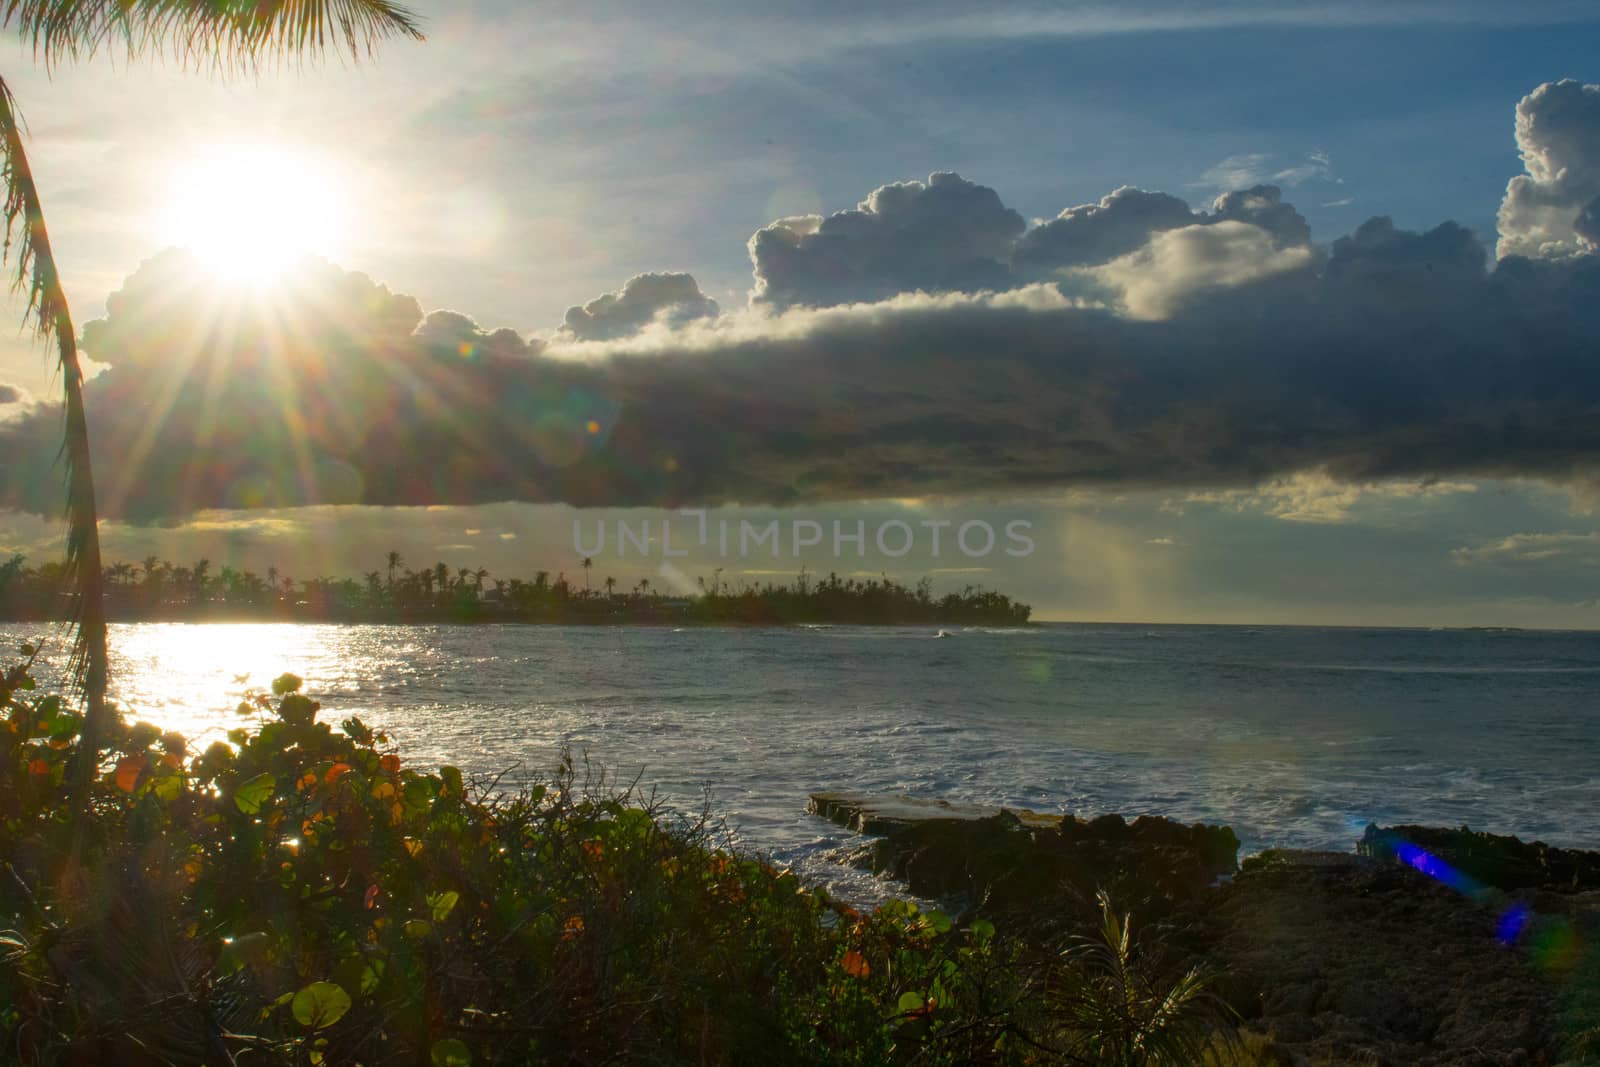 Pinones Beach scene at sunset on Puerto Rico